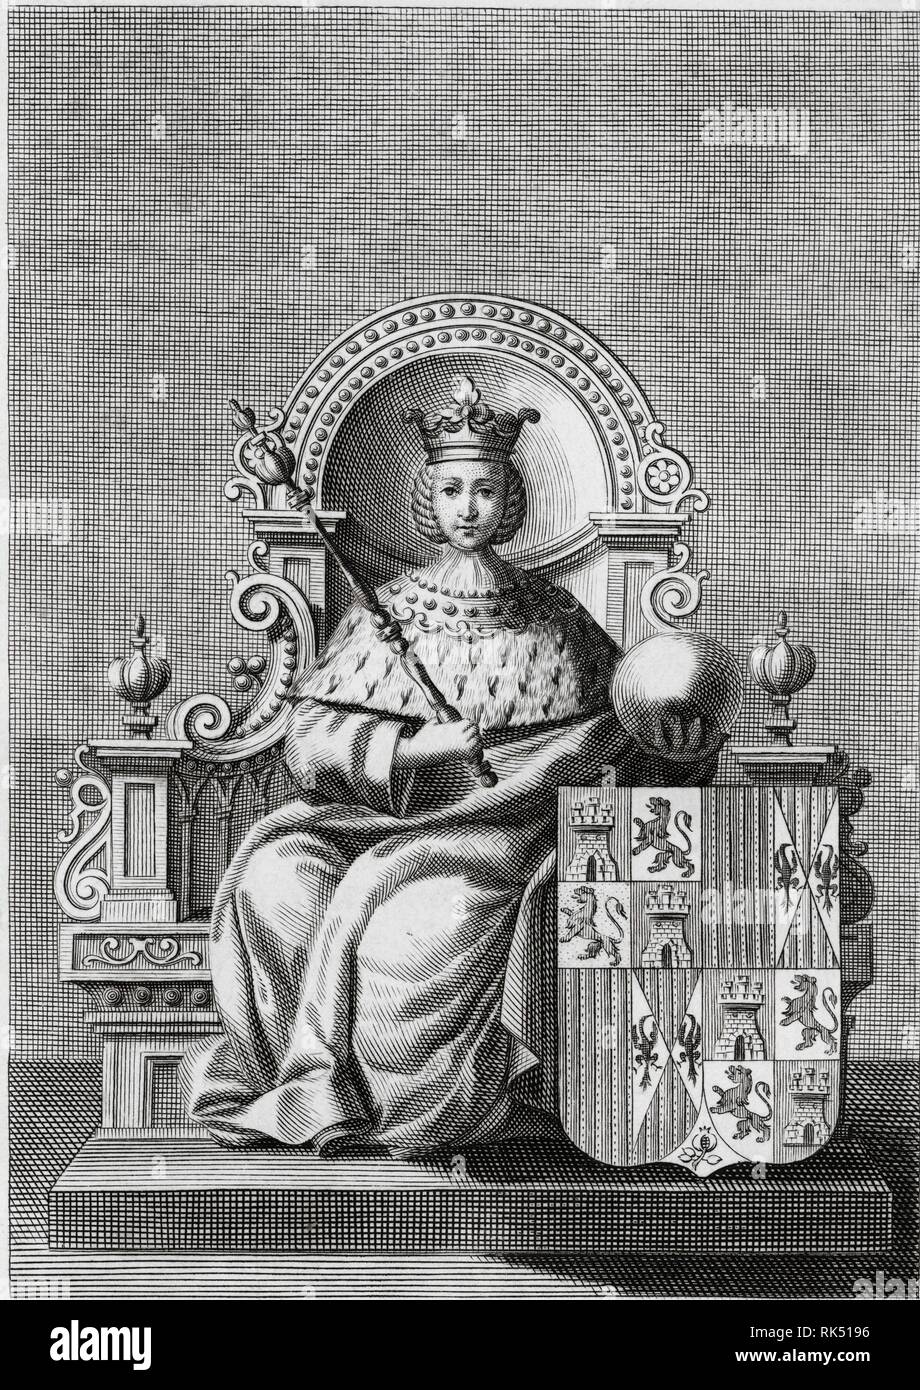 Isabel I de Castilla (1451-1504), reina de España, fundadora de la Inquisición moderna en España en 1480. Grabado de 1830. Stock Photo